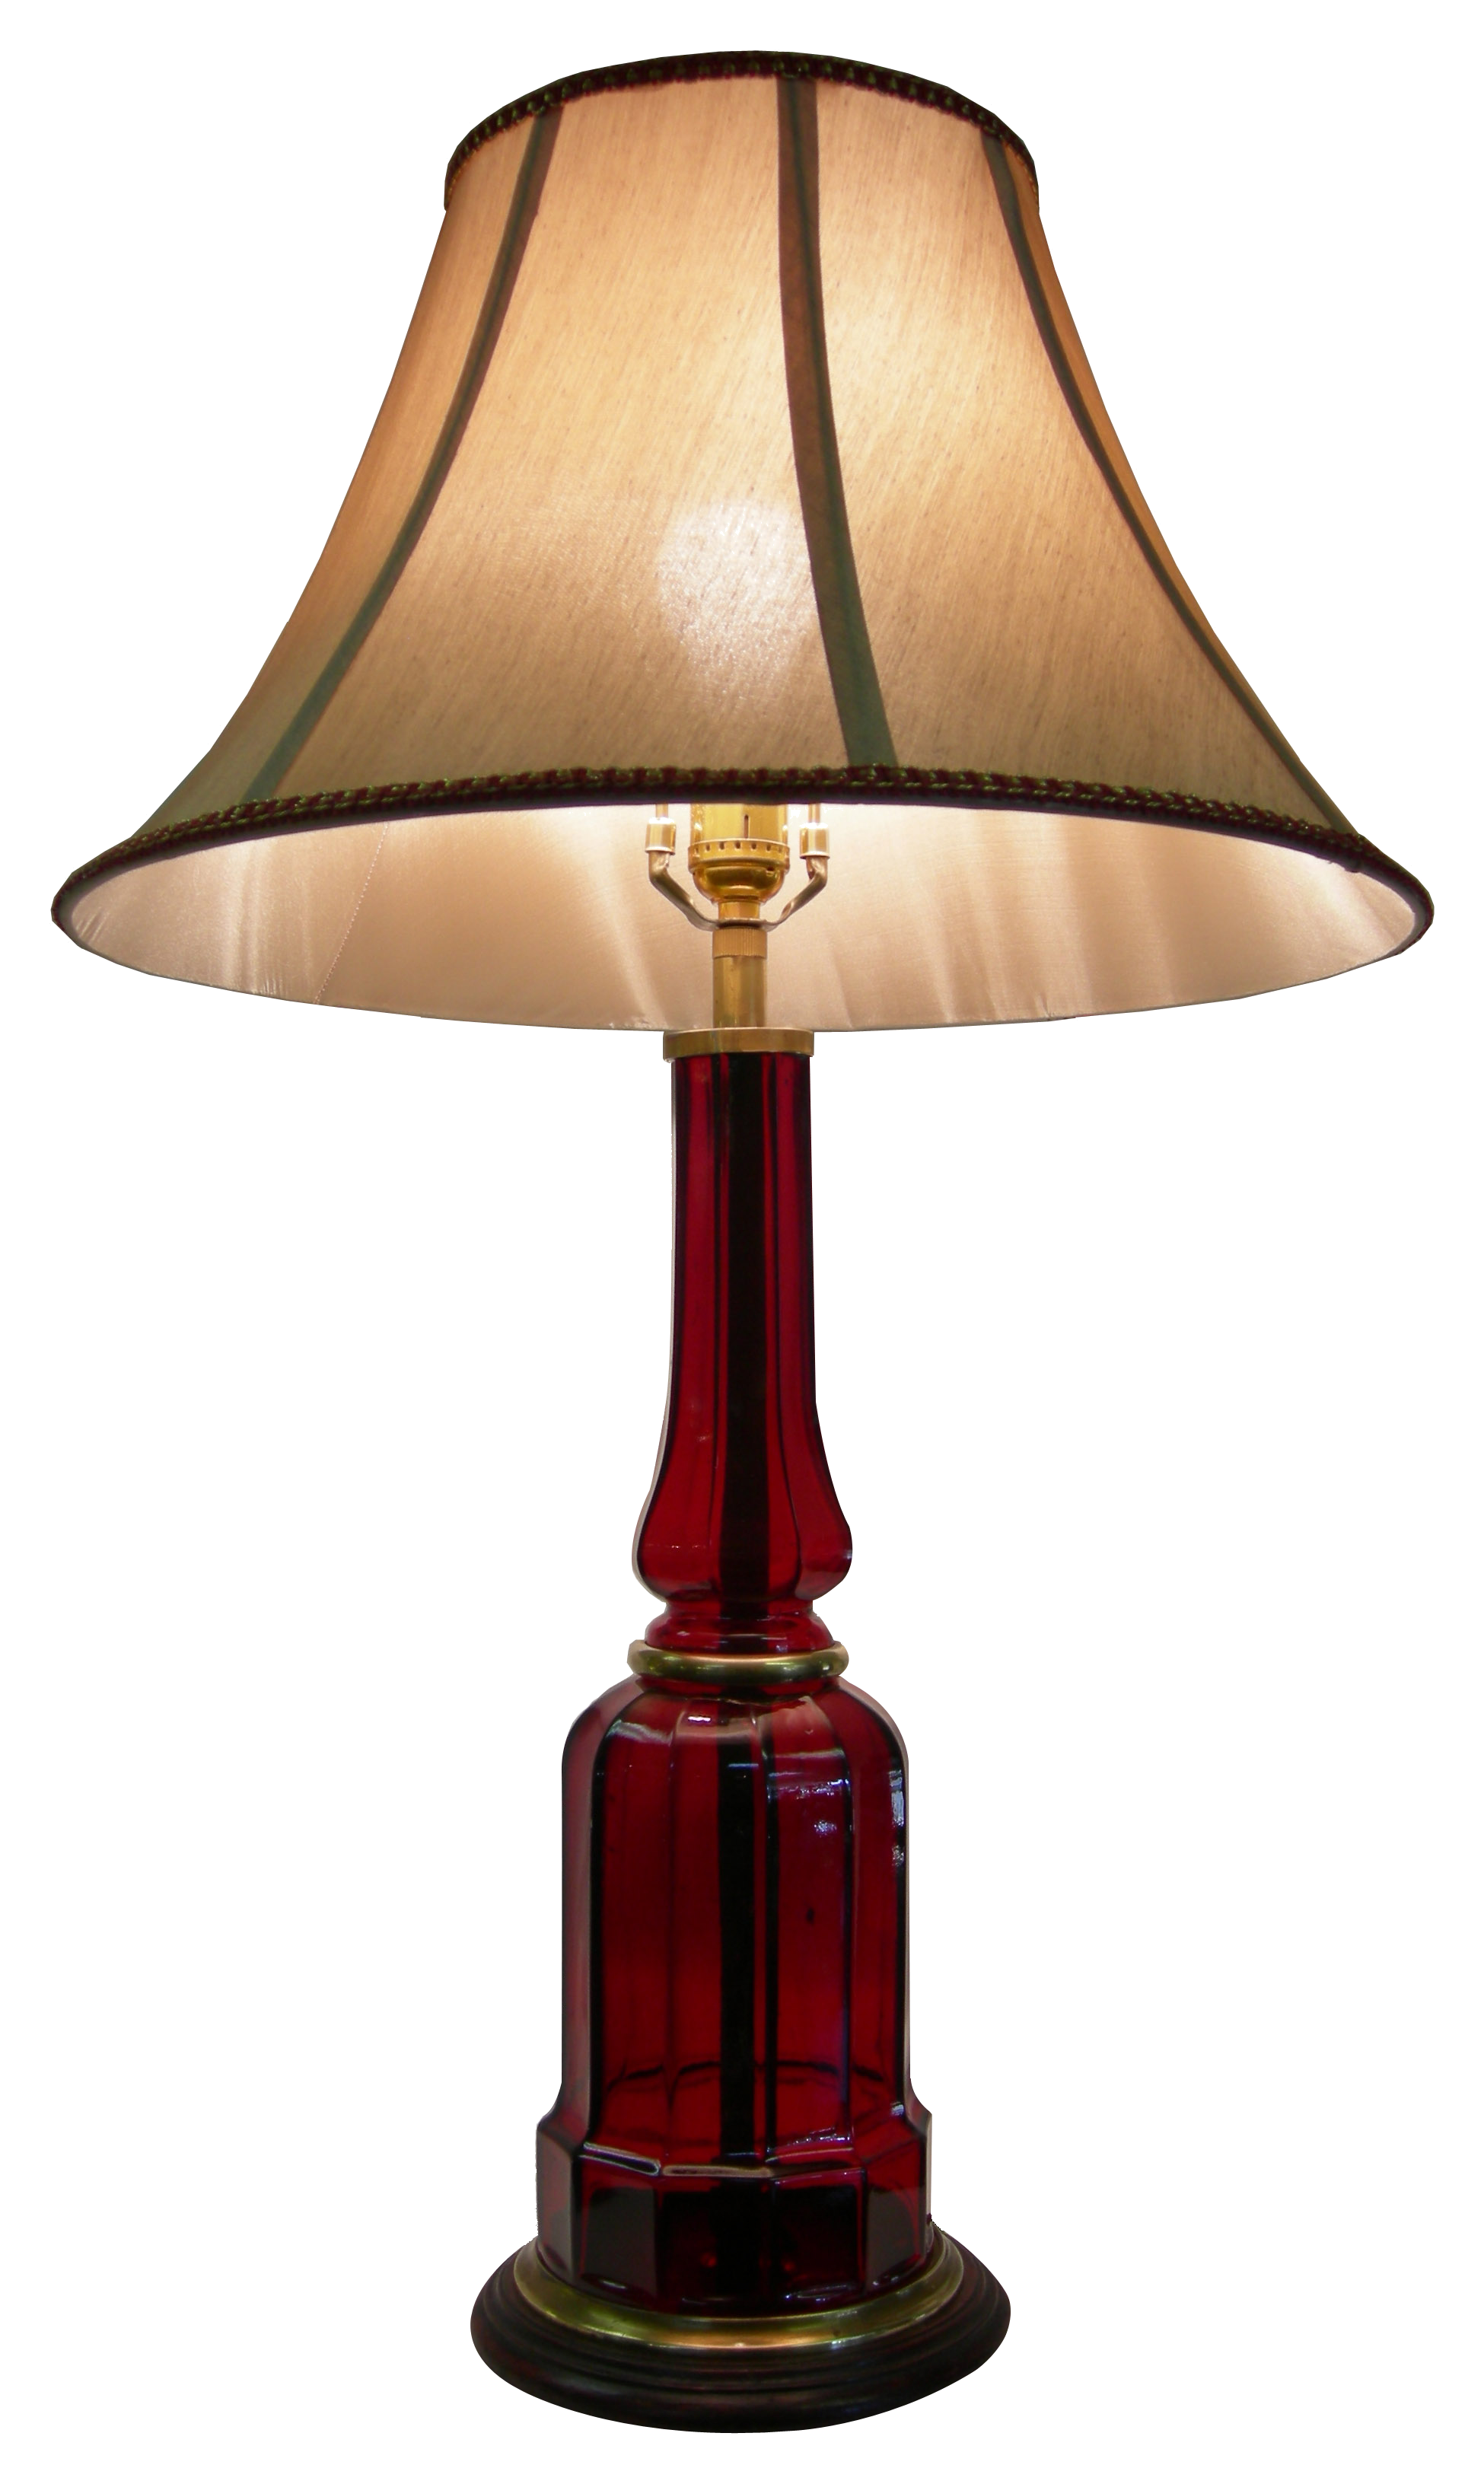 Lamp Png Image - Lamp, Transparent background PNG HD thumbnail